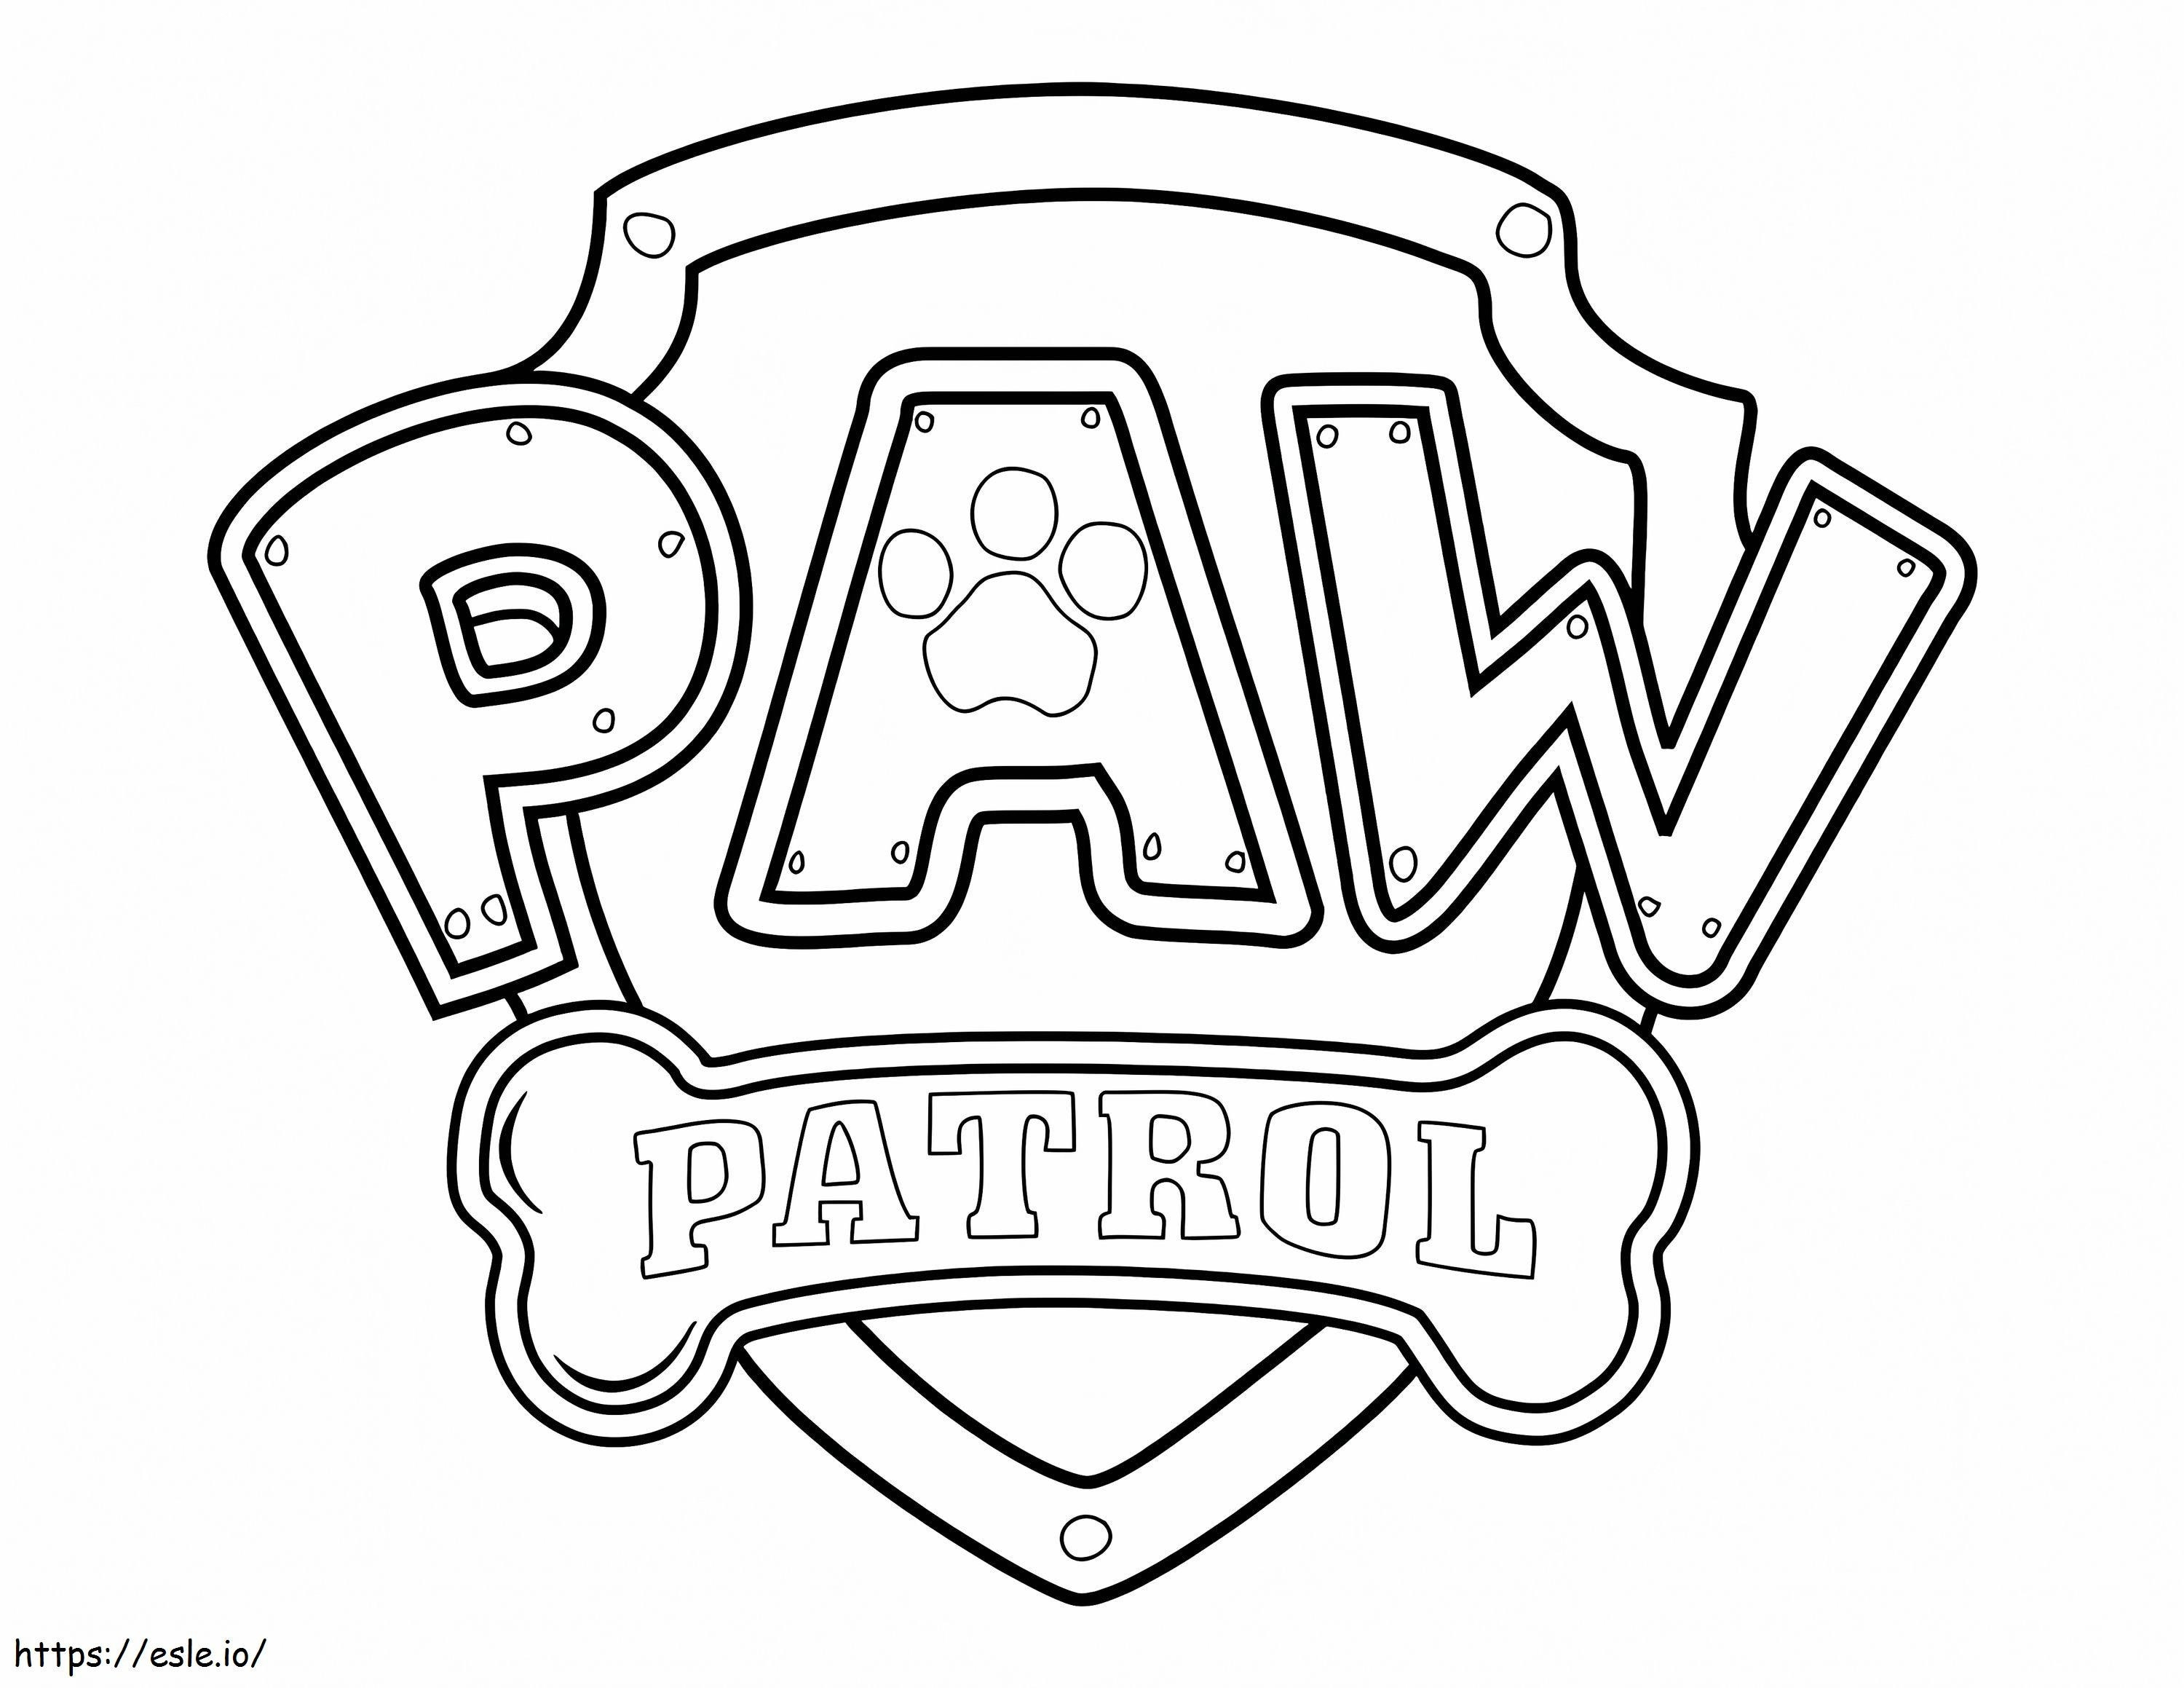 Paw Patrol 1 coloring page